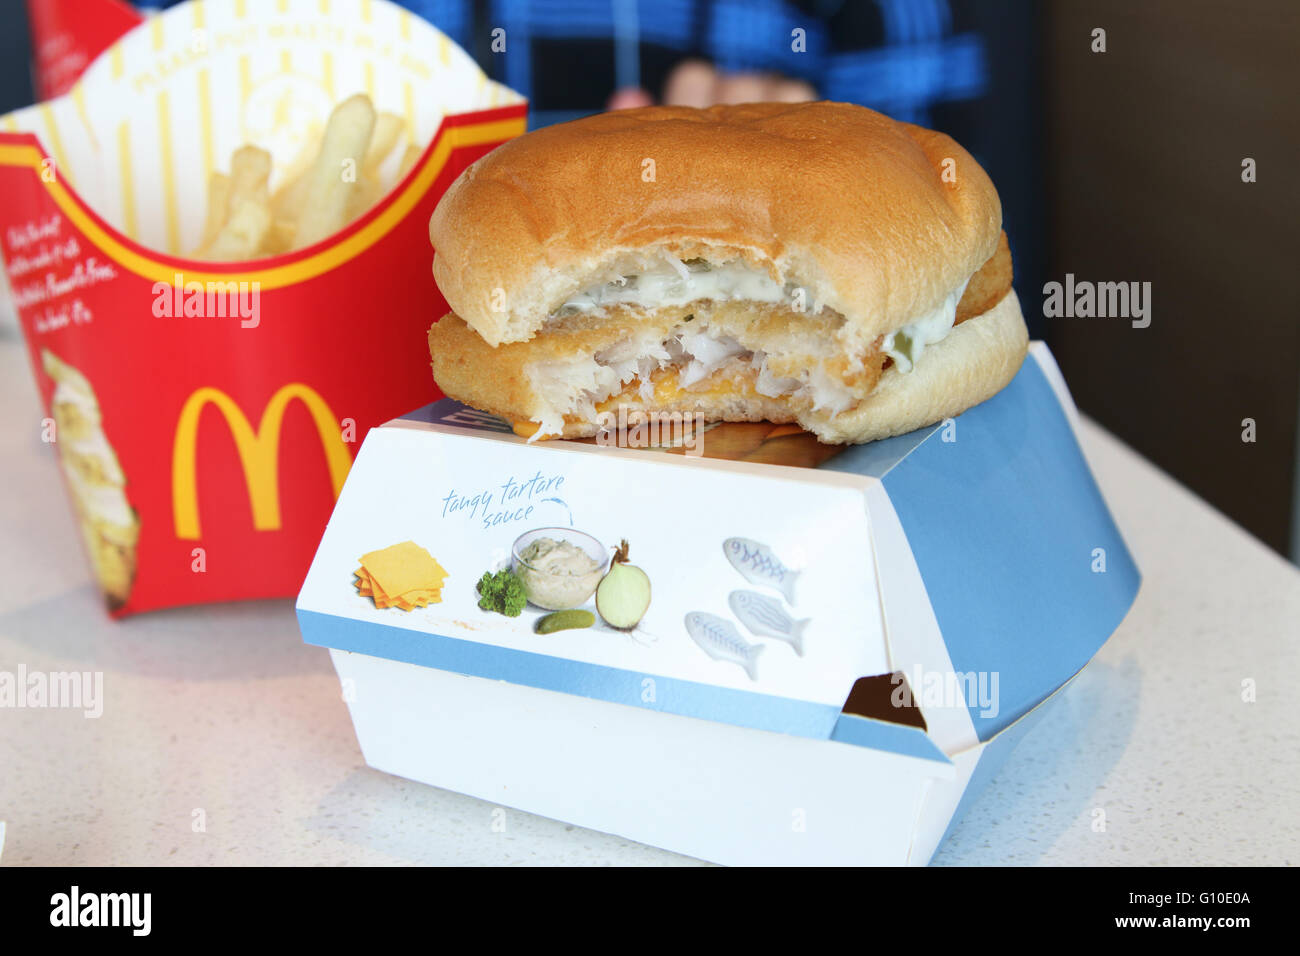 McDonald's fries and FiletoFish burger with a bite